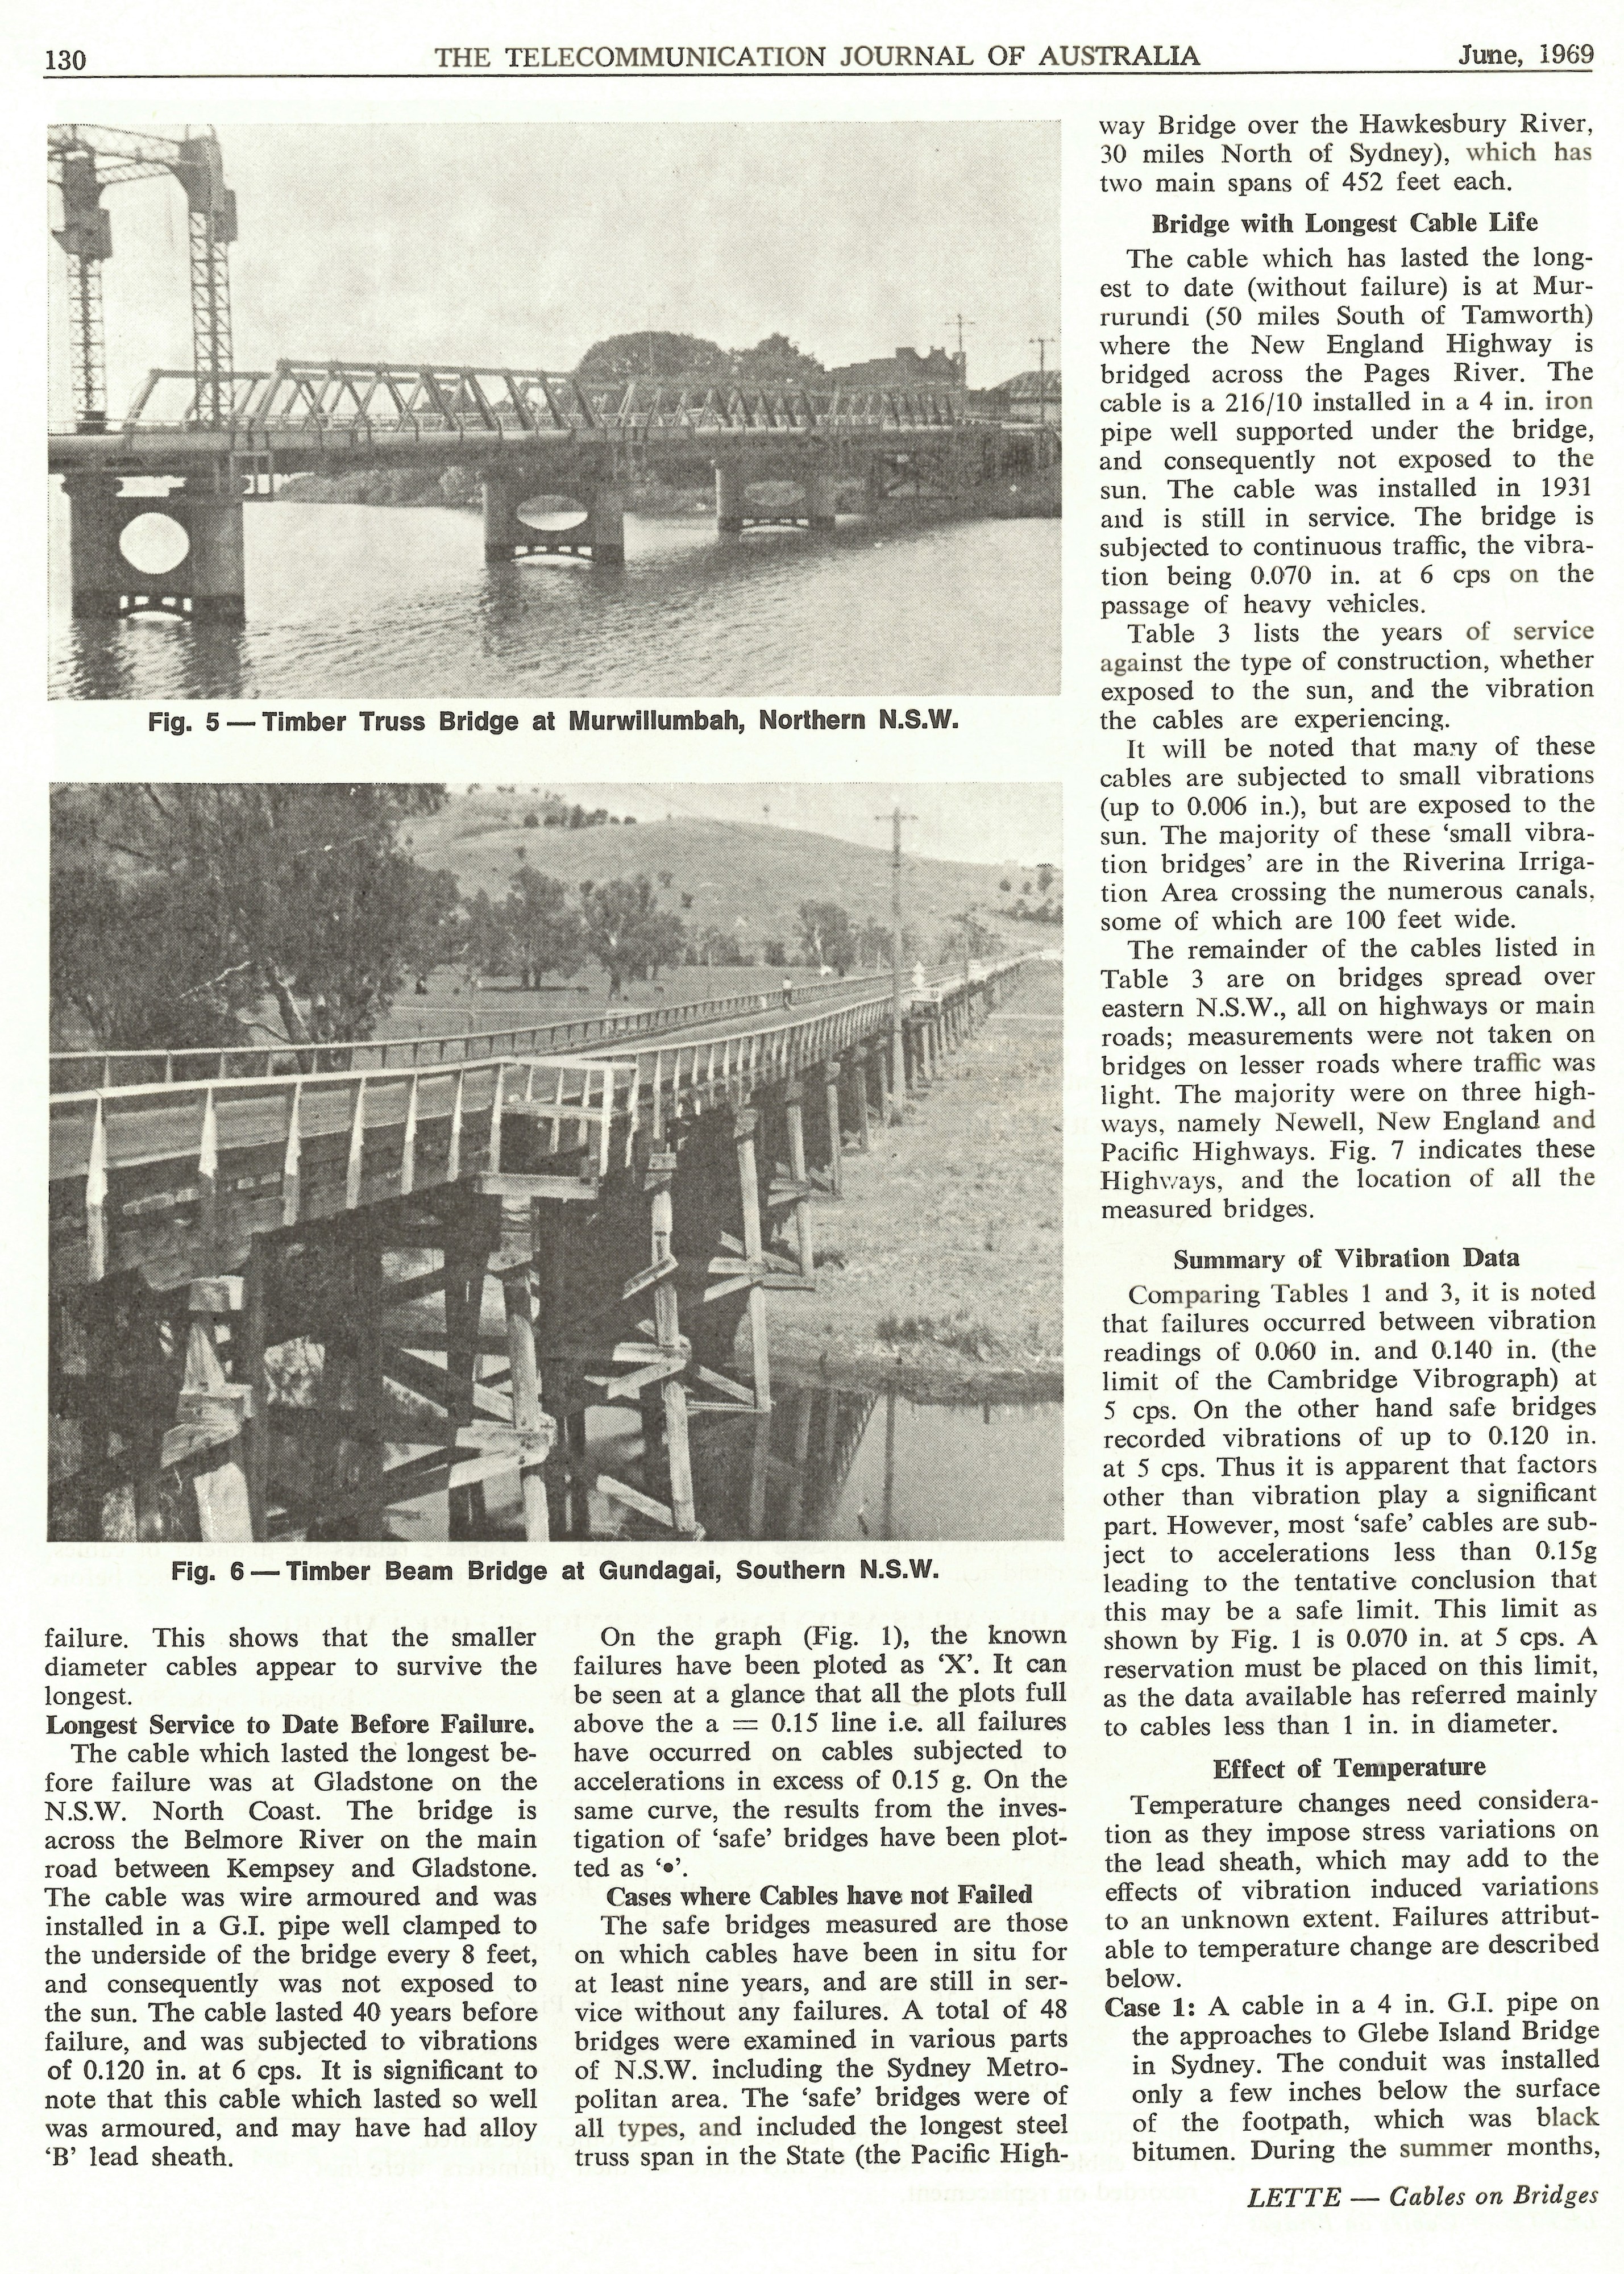 Lead Sheathed Cables on Bridges, Page 130